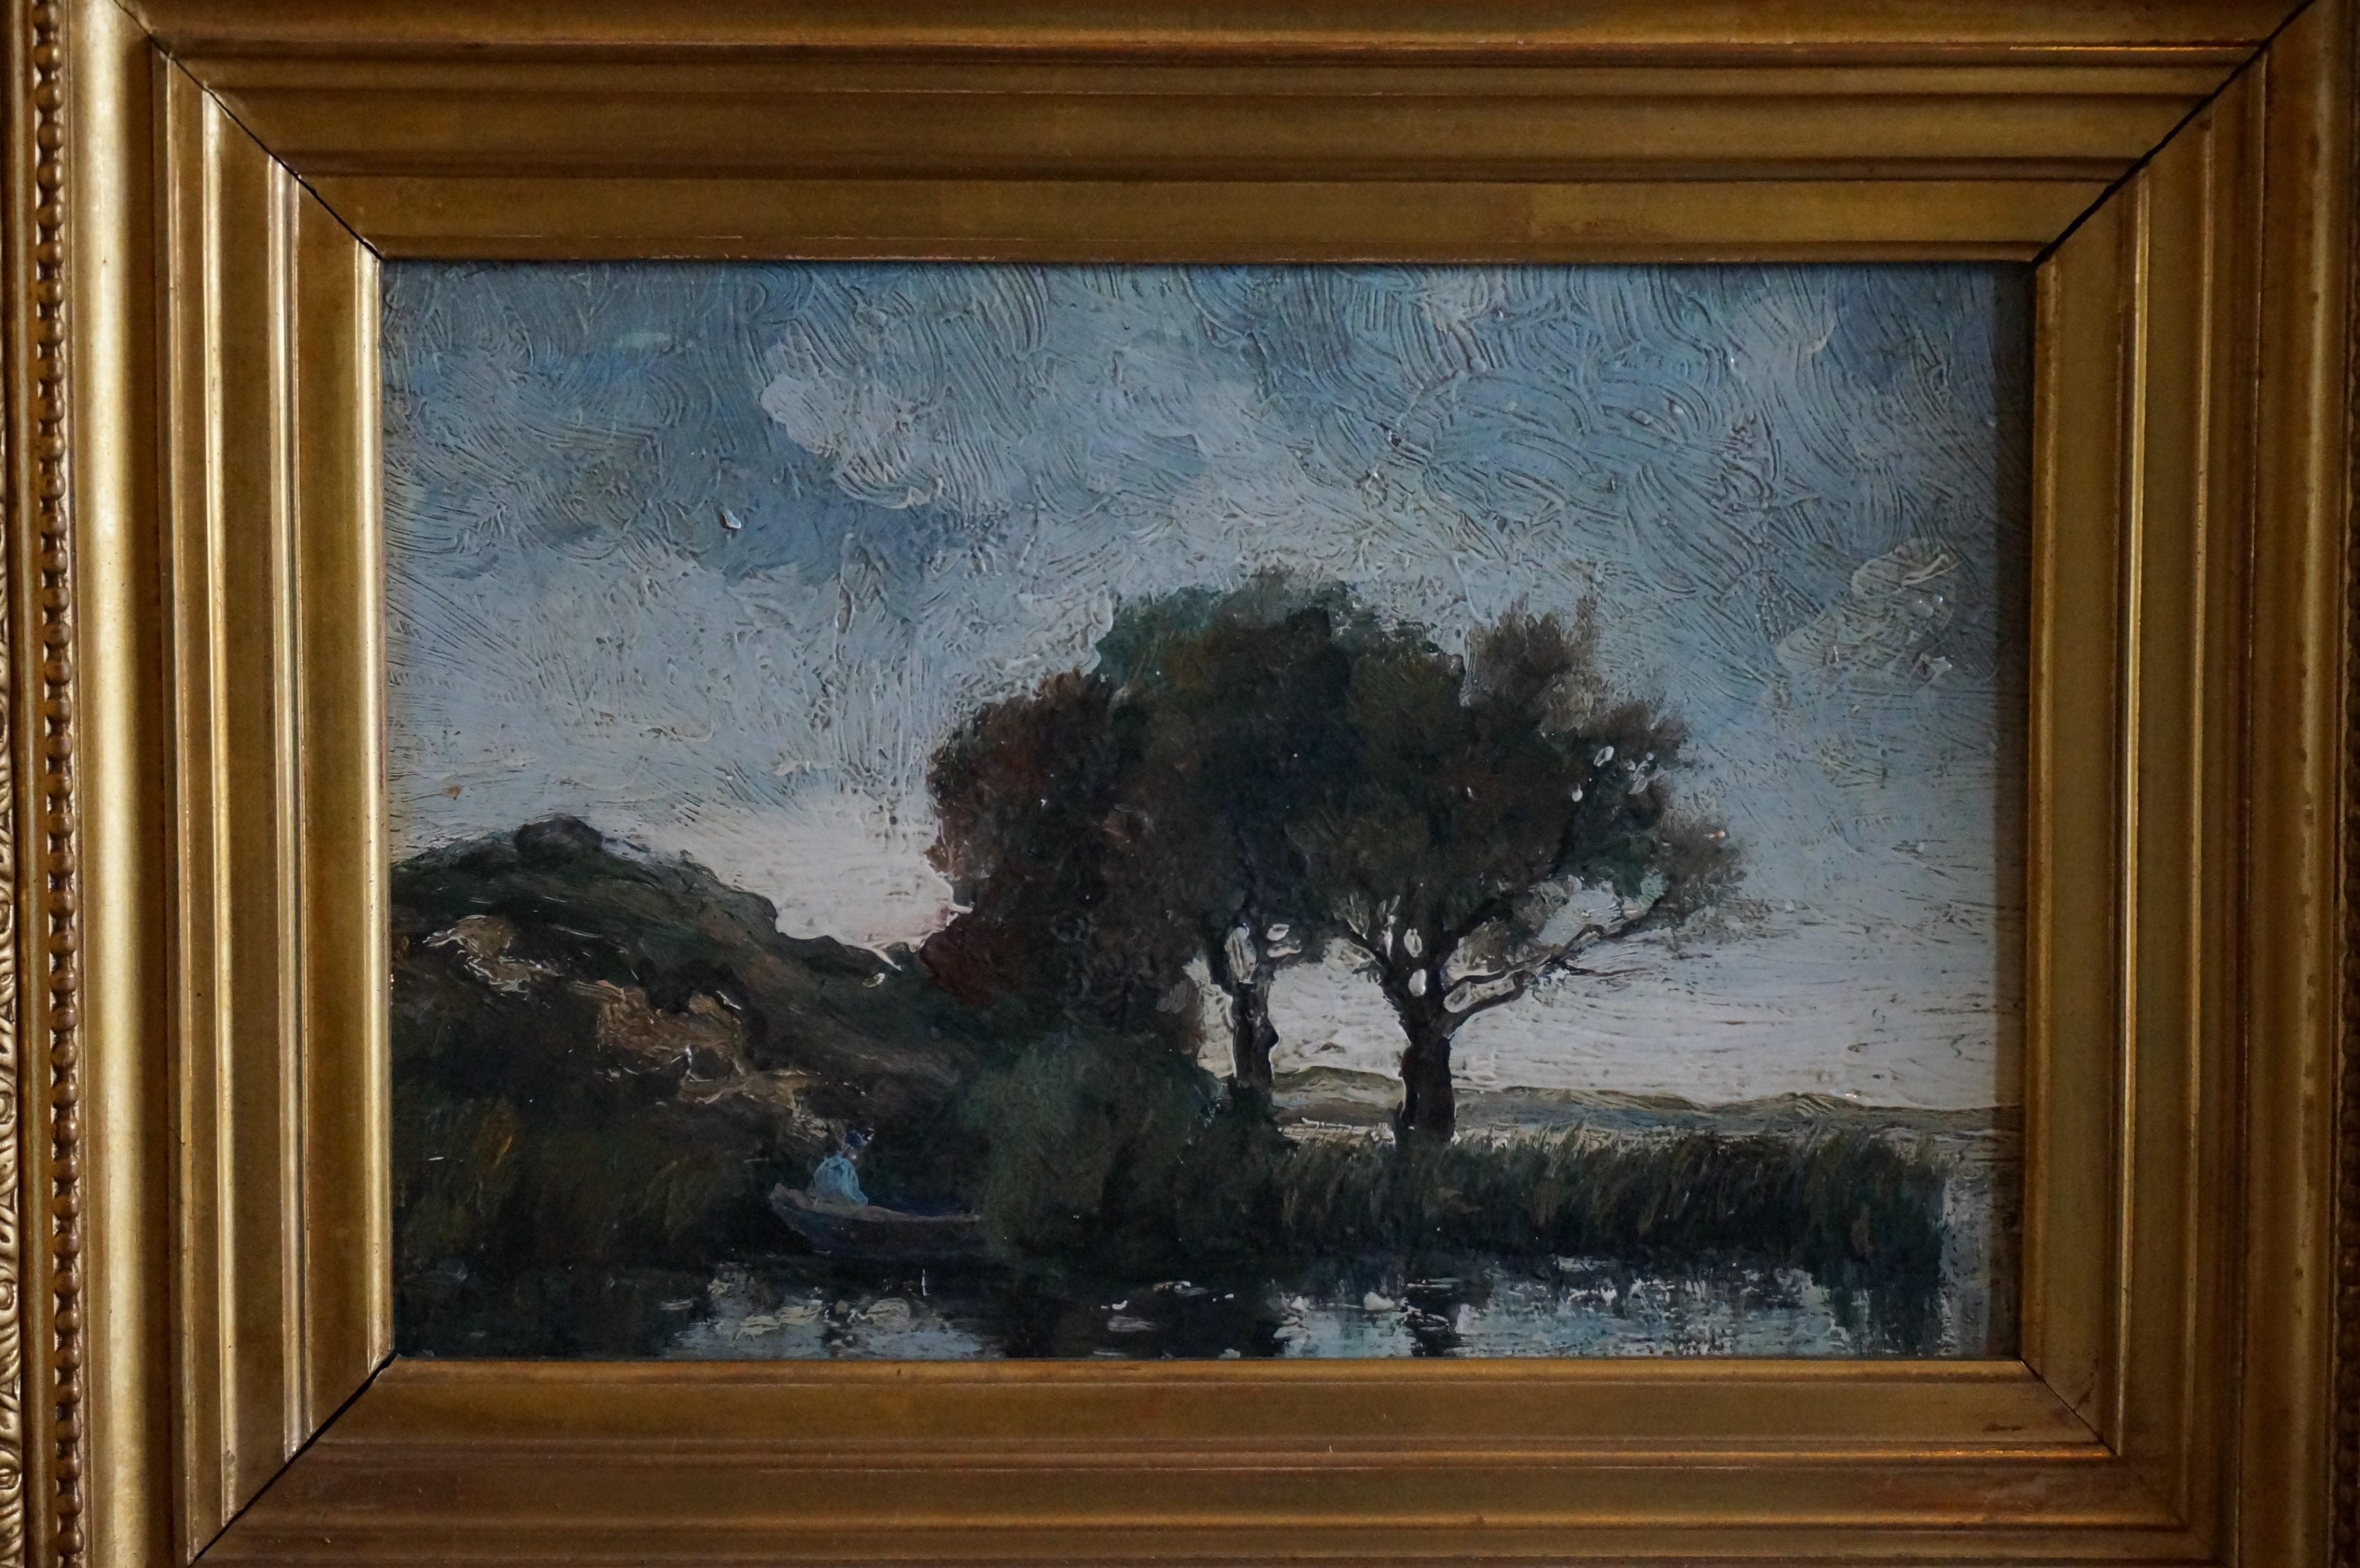 Landscape with fisherman, impressionist painting, school of Barbizon/The Hague  - Impressionist Painting by Théophile de Bock